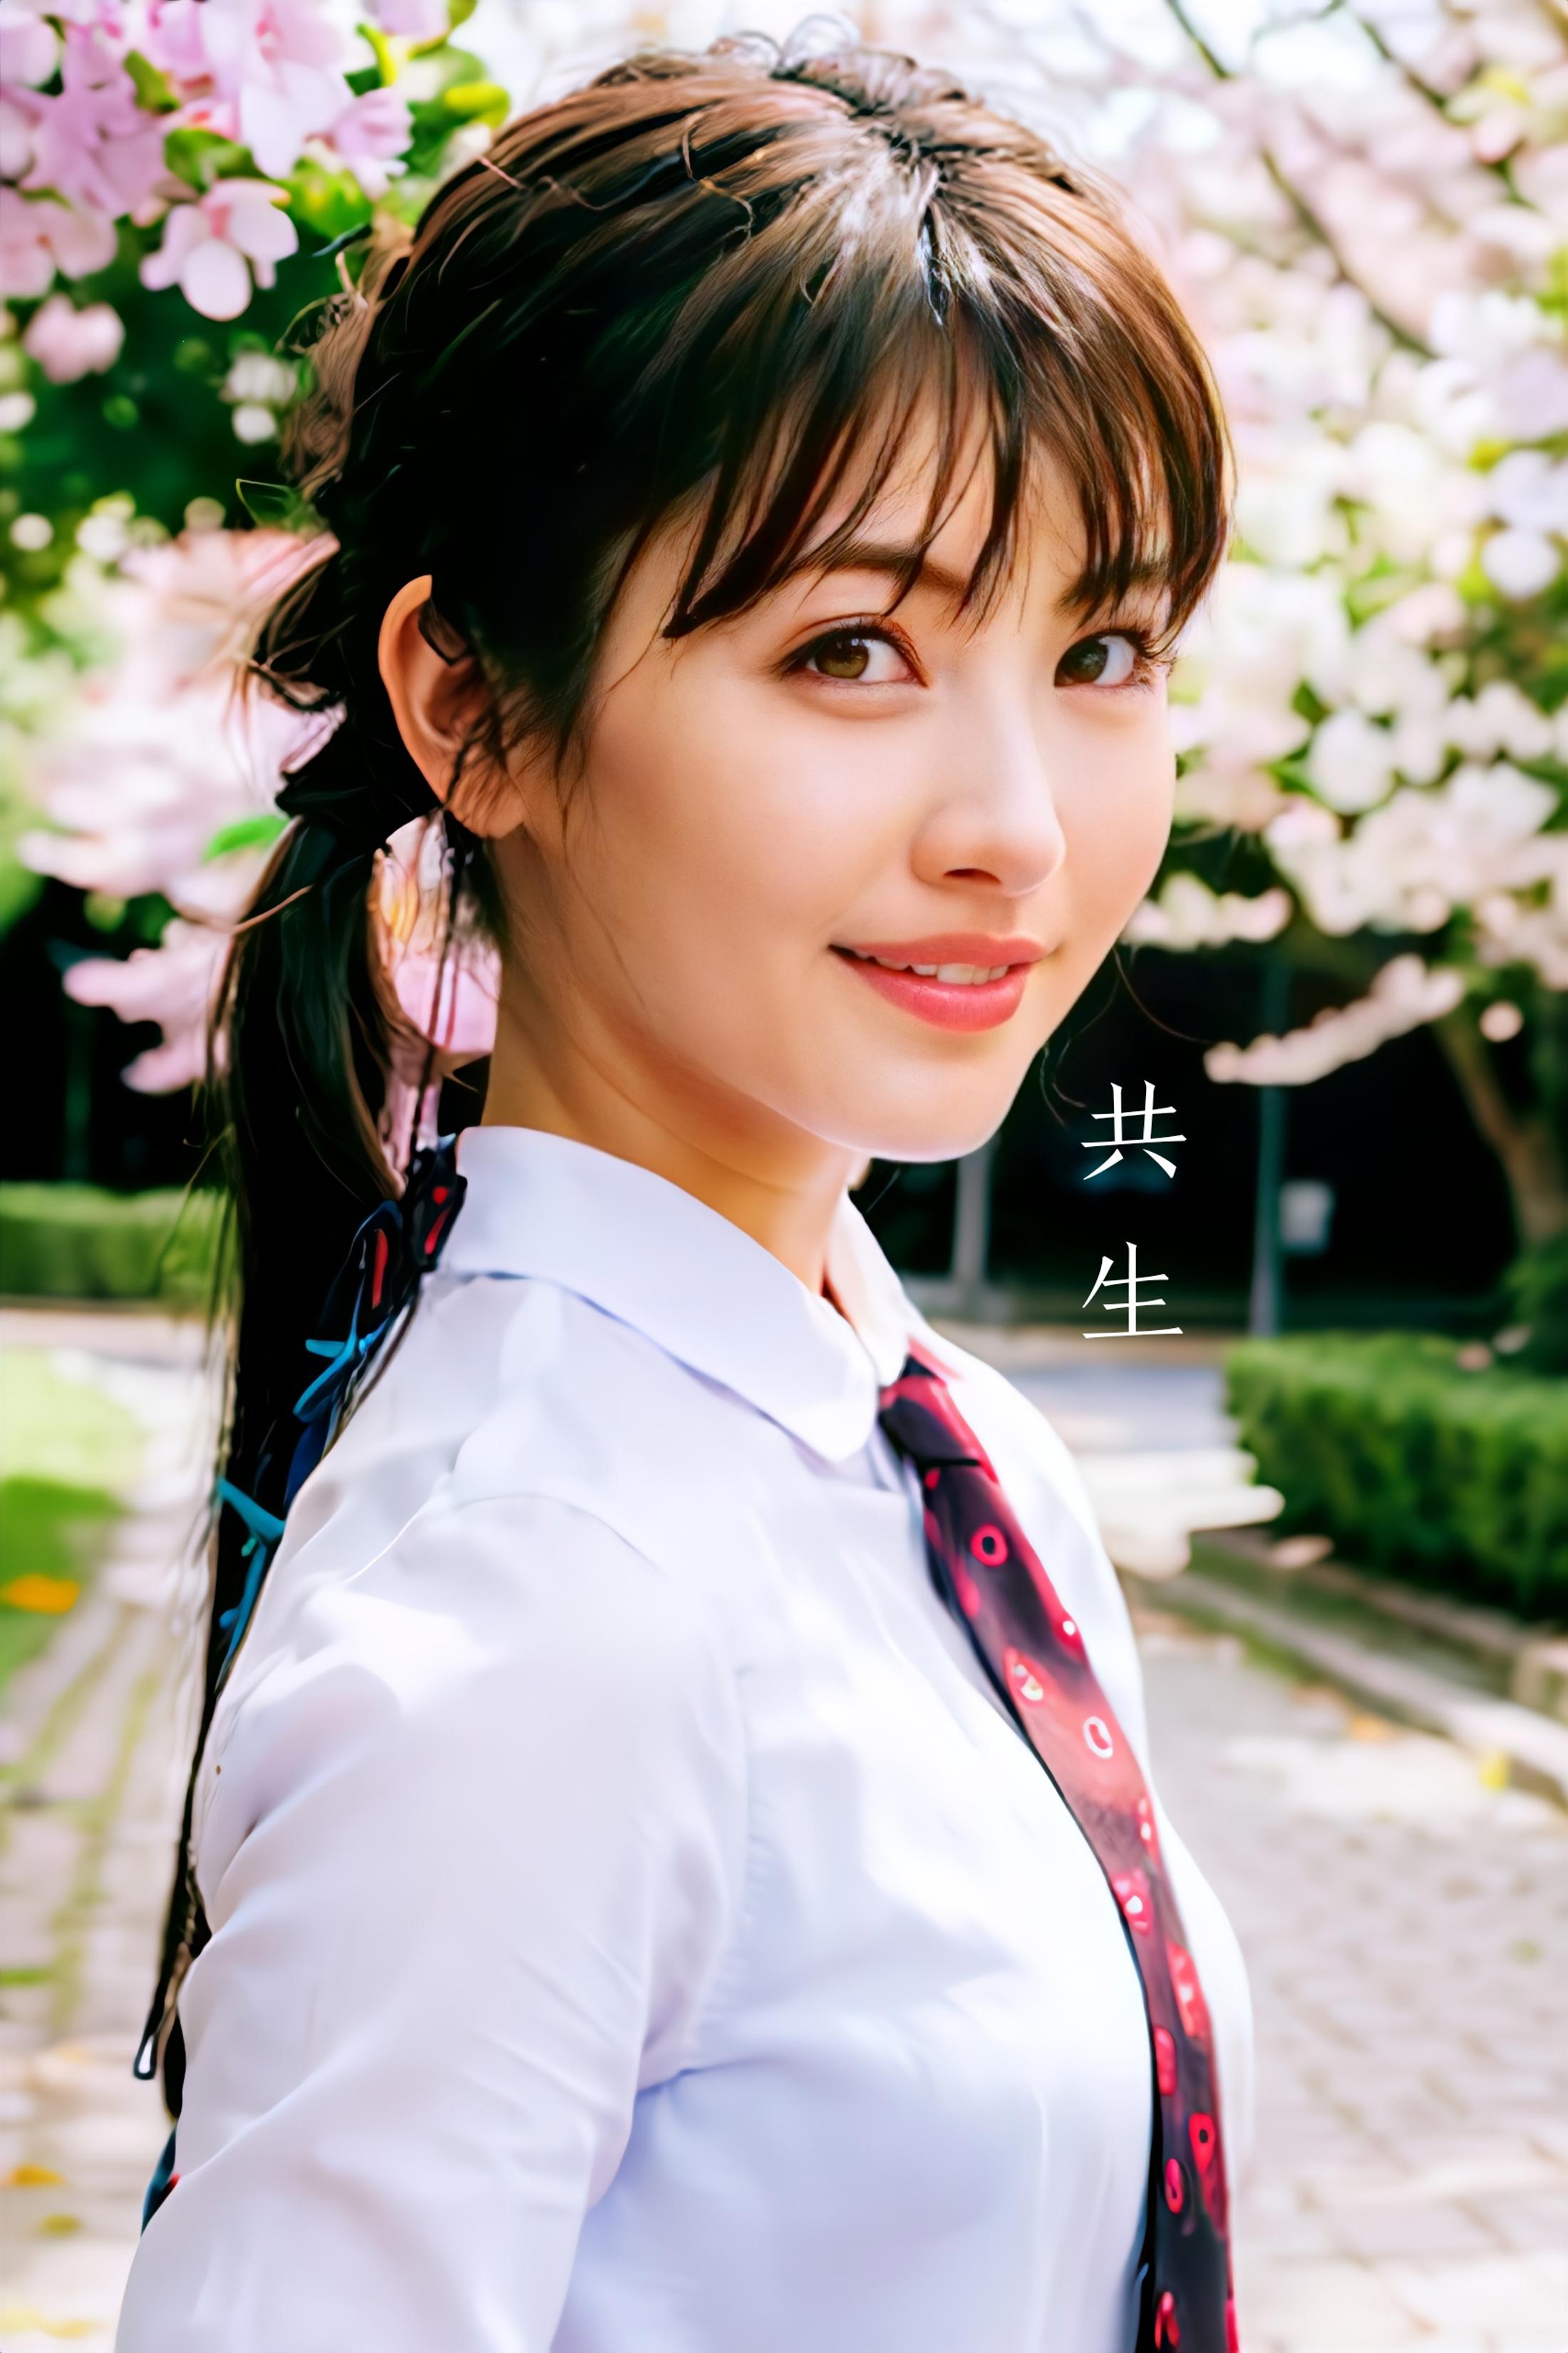 Actress Minami_○边美波 image by isxdsama